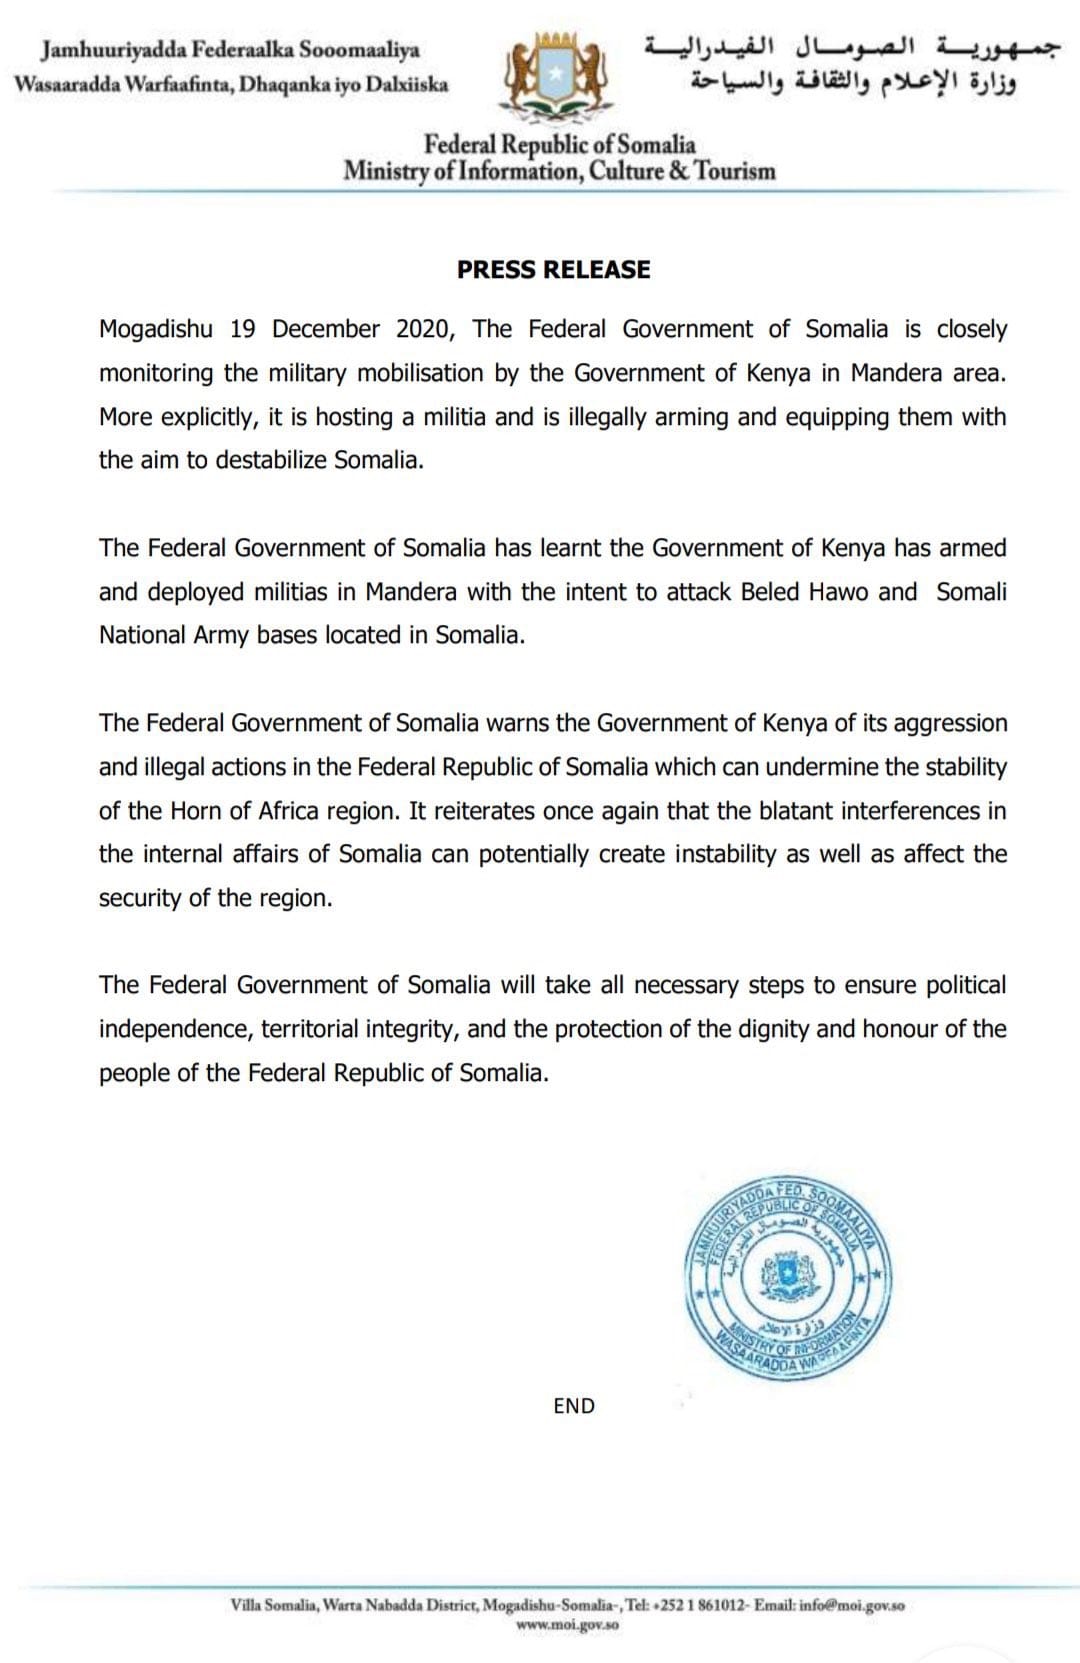 press-release-mogadishu-19-12-2020.jpg